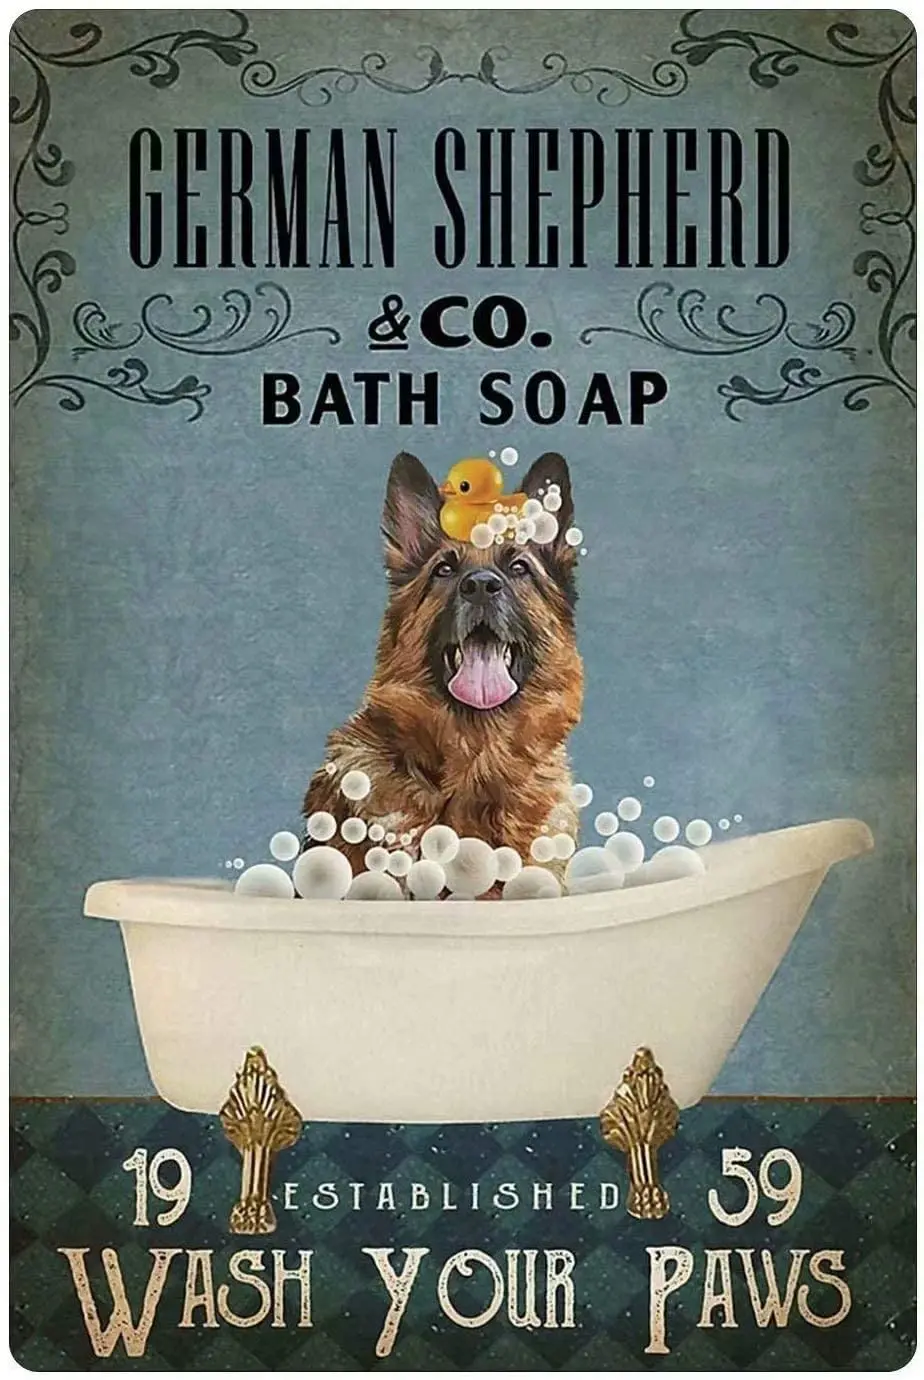 

Vintage Dog Metal Tin Sign German Shepherd Co. Bath Soap Wash Your Paws Printing Poster Bathroom Toilet 8 X 12Inch